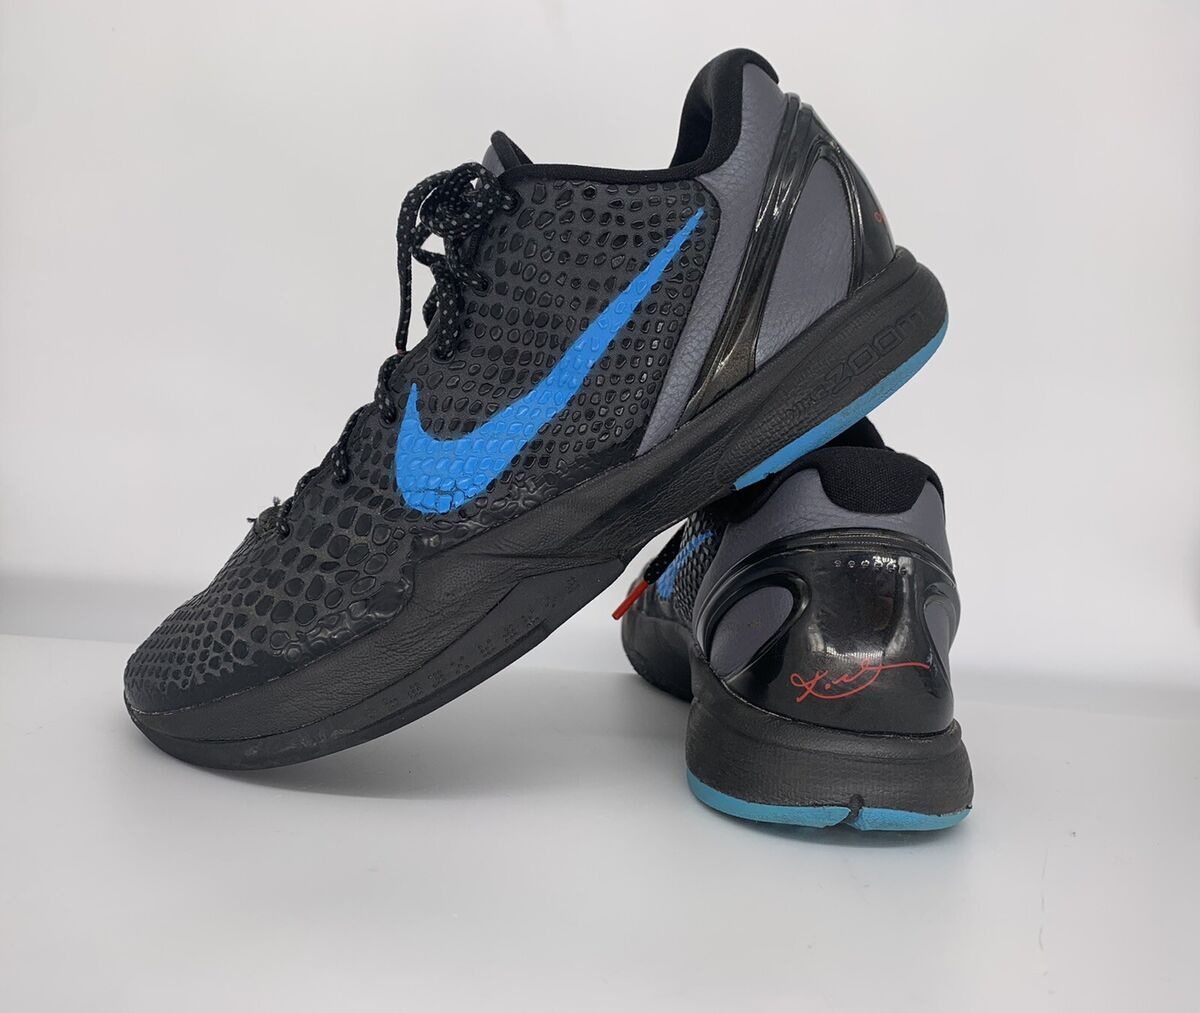 Nike Zoom Kobe VI 6 “Dark Knight” 2011 Size 11 Authentic RARE!